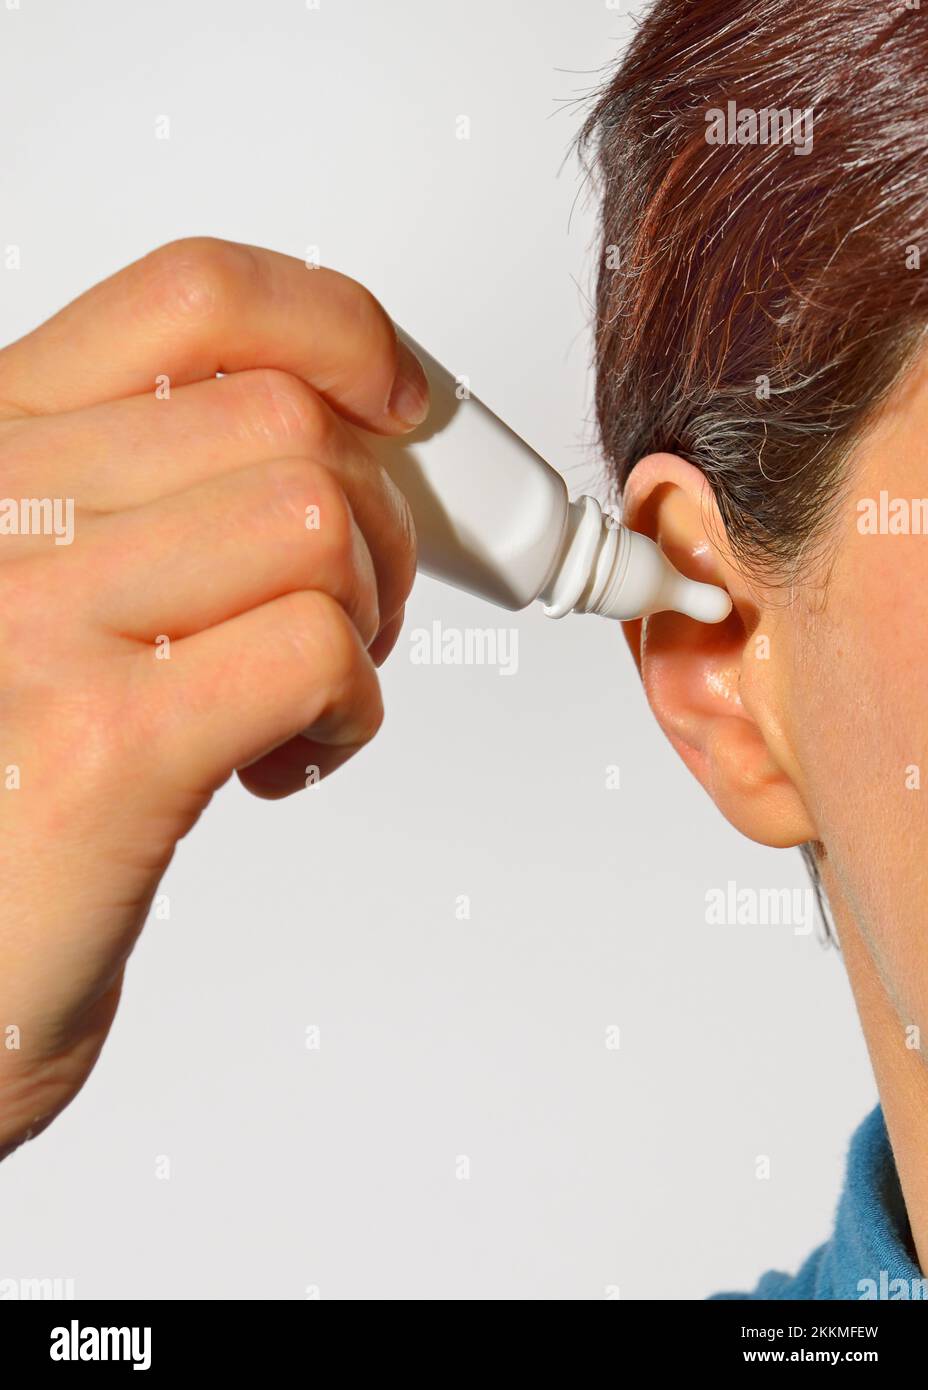 Ear wax removal Stock Photo - Alamy